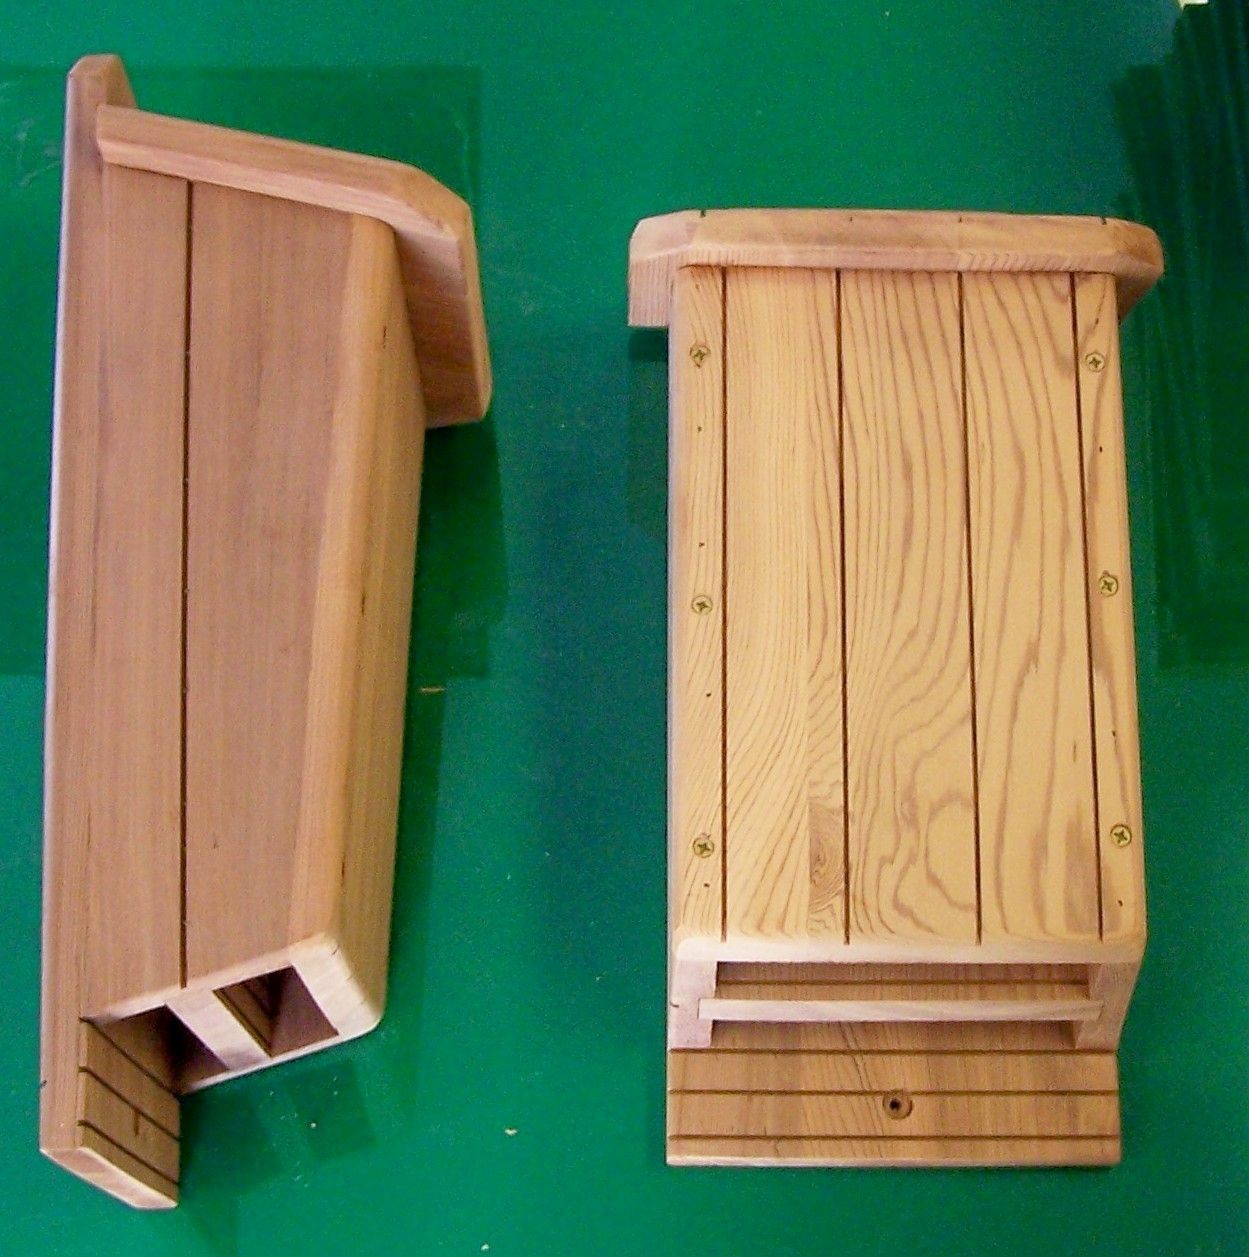 Best ideas about Bat Boxes DIY
. Save or Pin Plan for bat house House design plans Now.